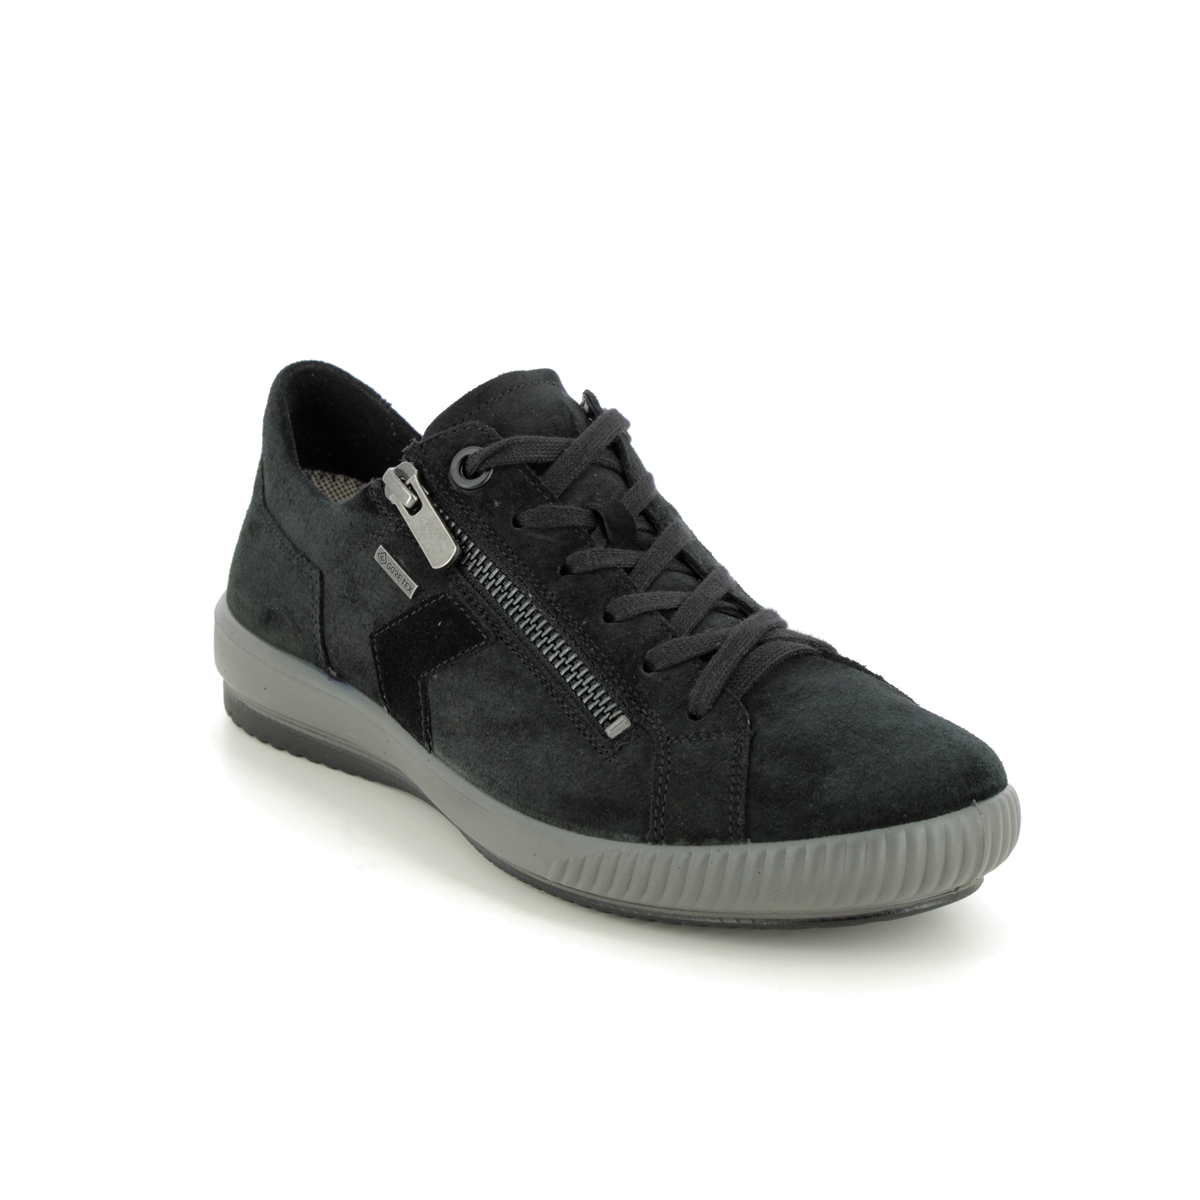 Legero Tanaro5 Zip Gtx Black Suede Womens Lacing Shoes 2000163-0000 In Size 4.5 In Plain Black Suede